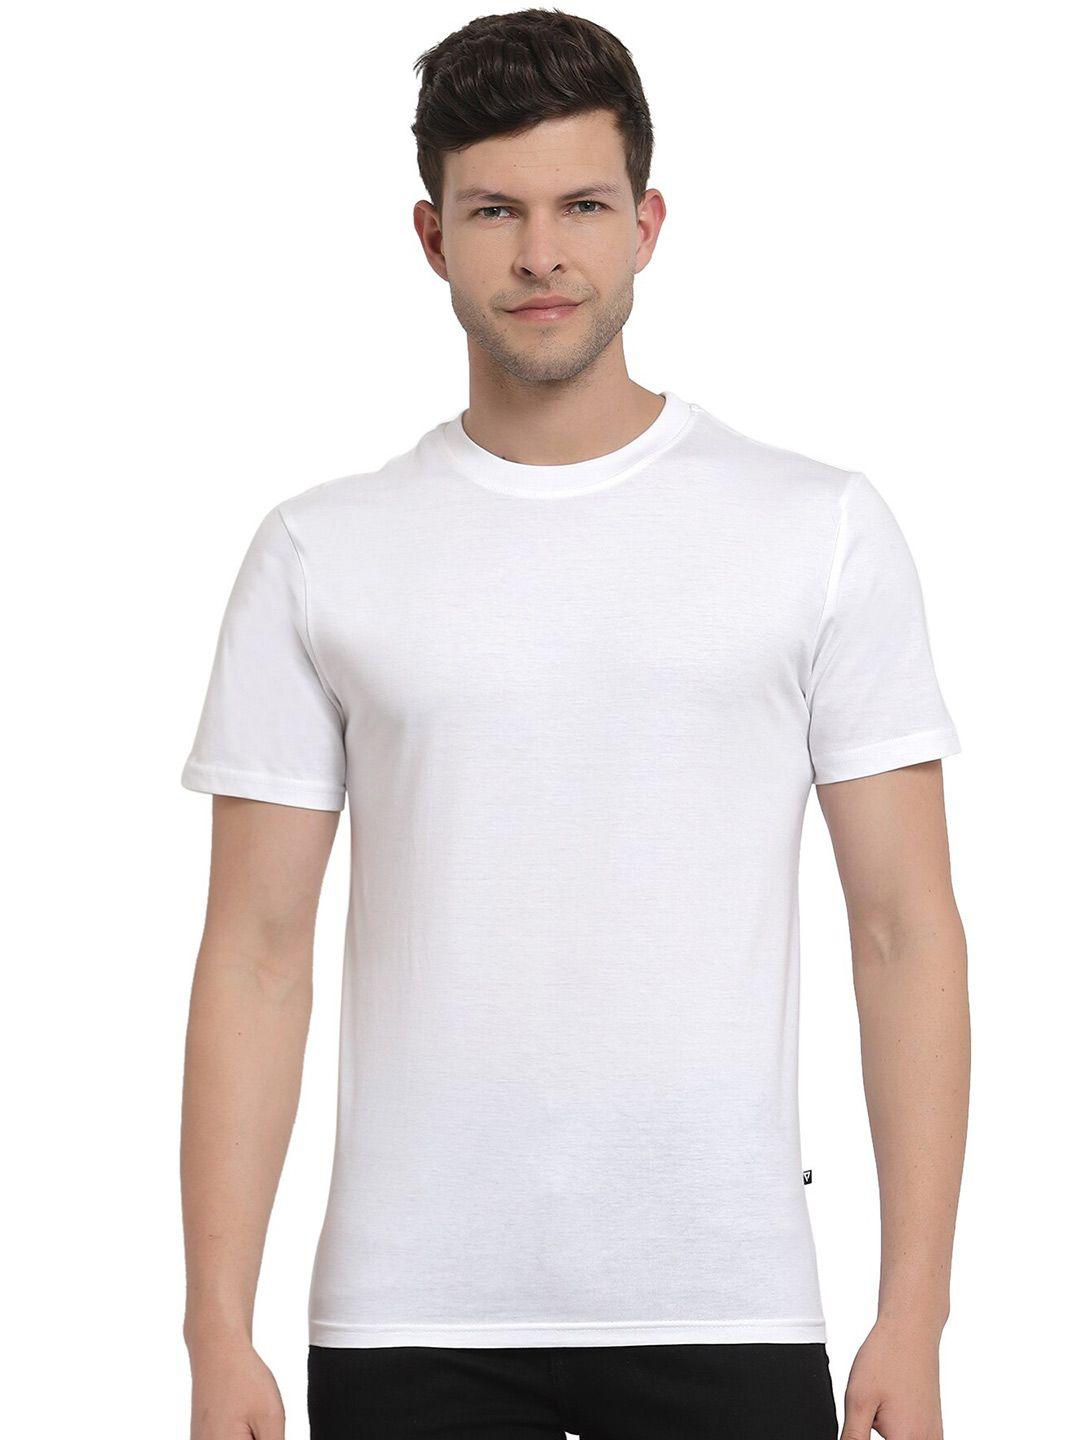 proteens men white cotton t-shirt